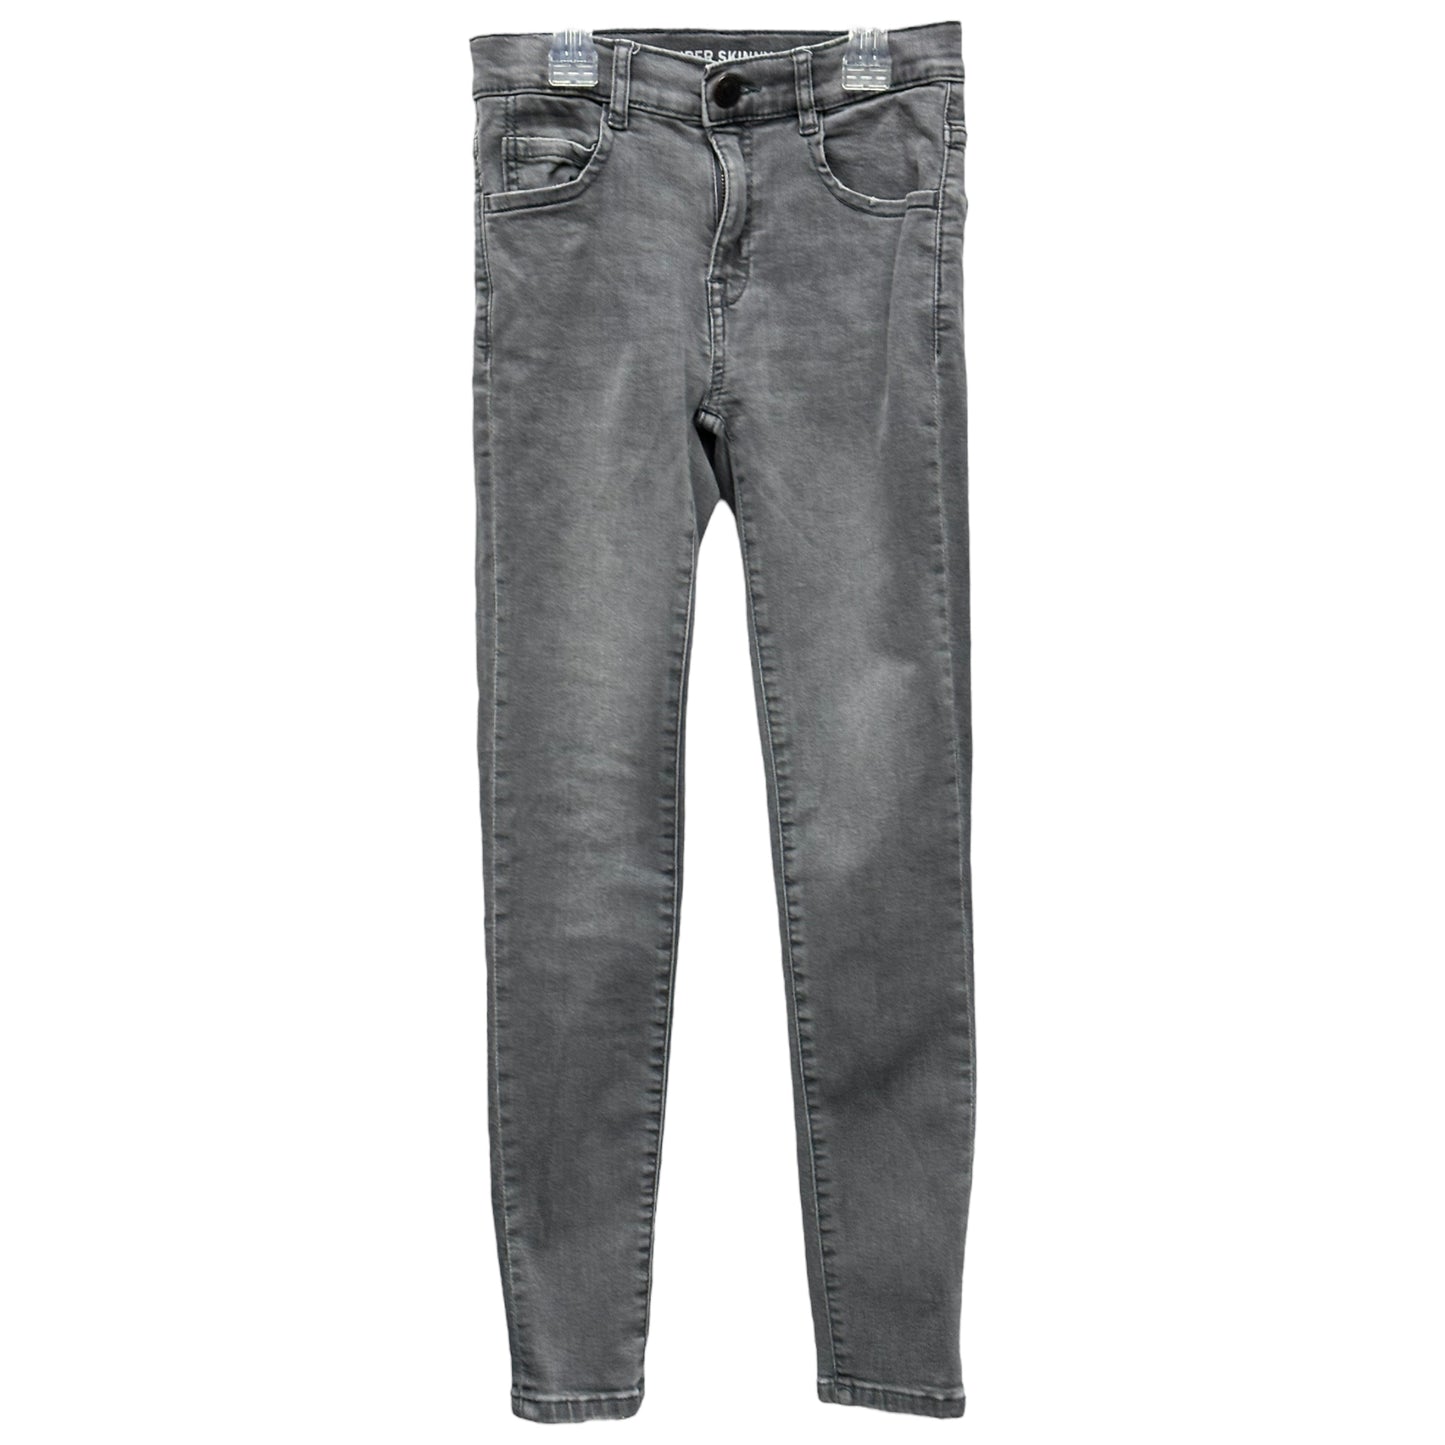 Zara 9 Jeans